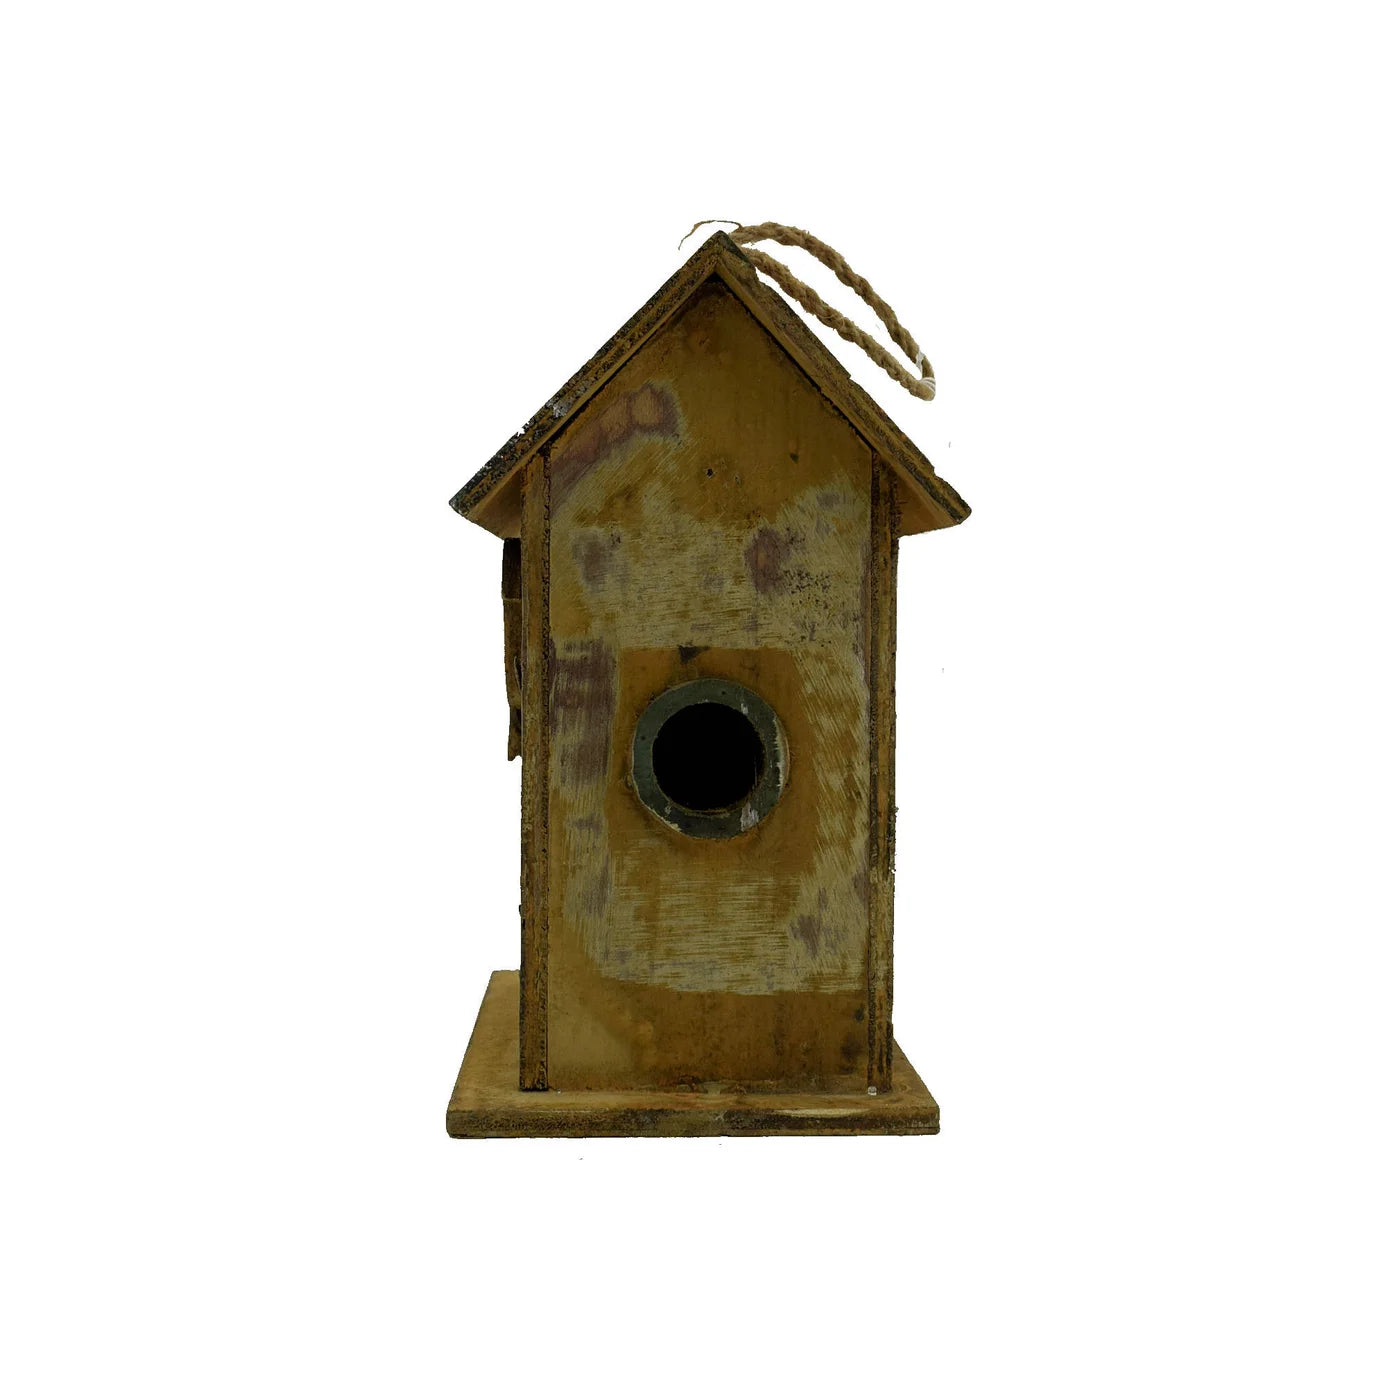 Hanging Decorative Birdhouse 7"